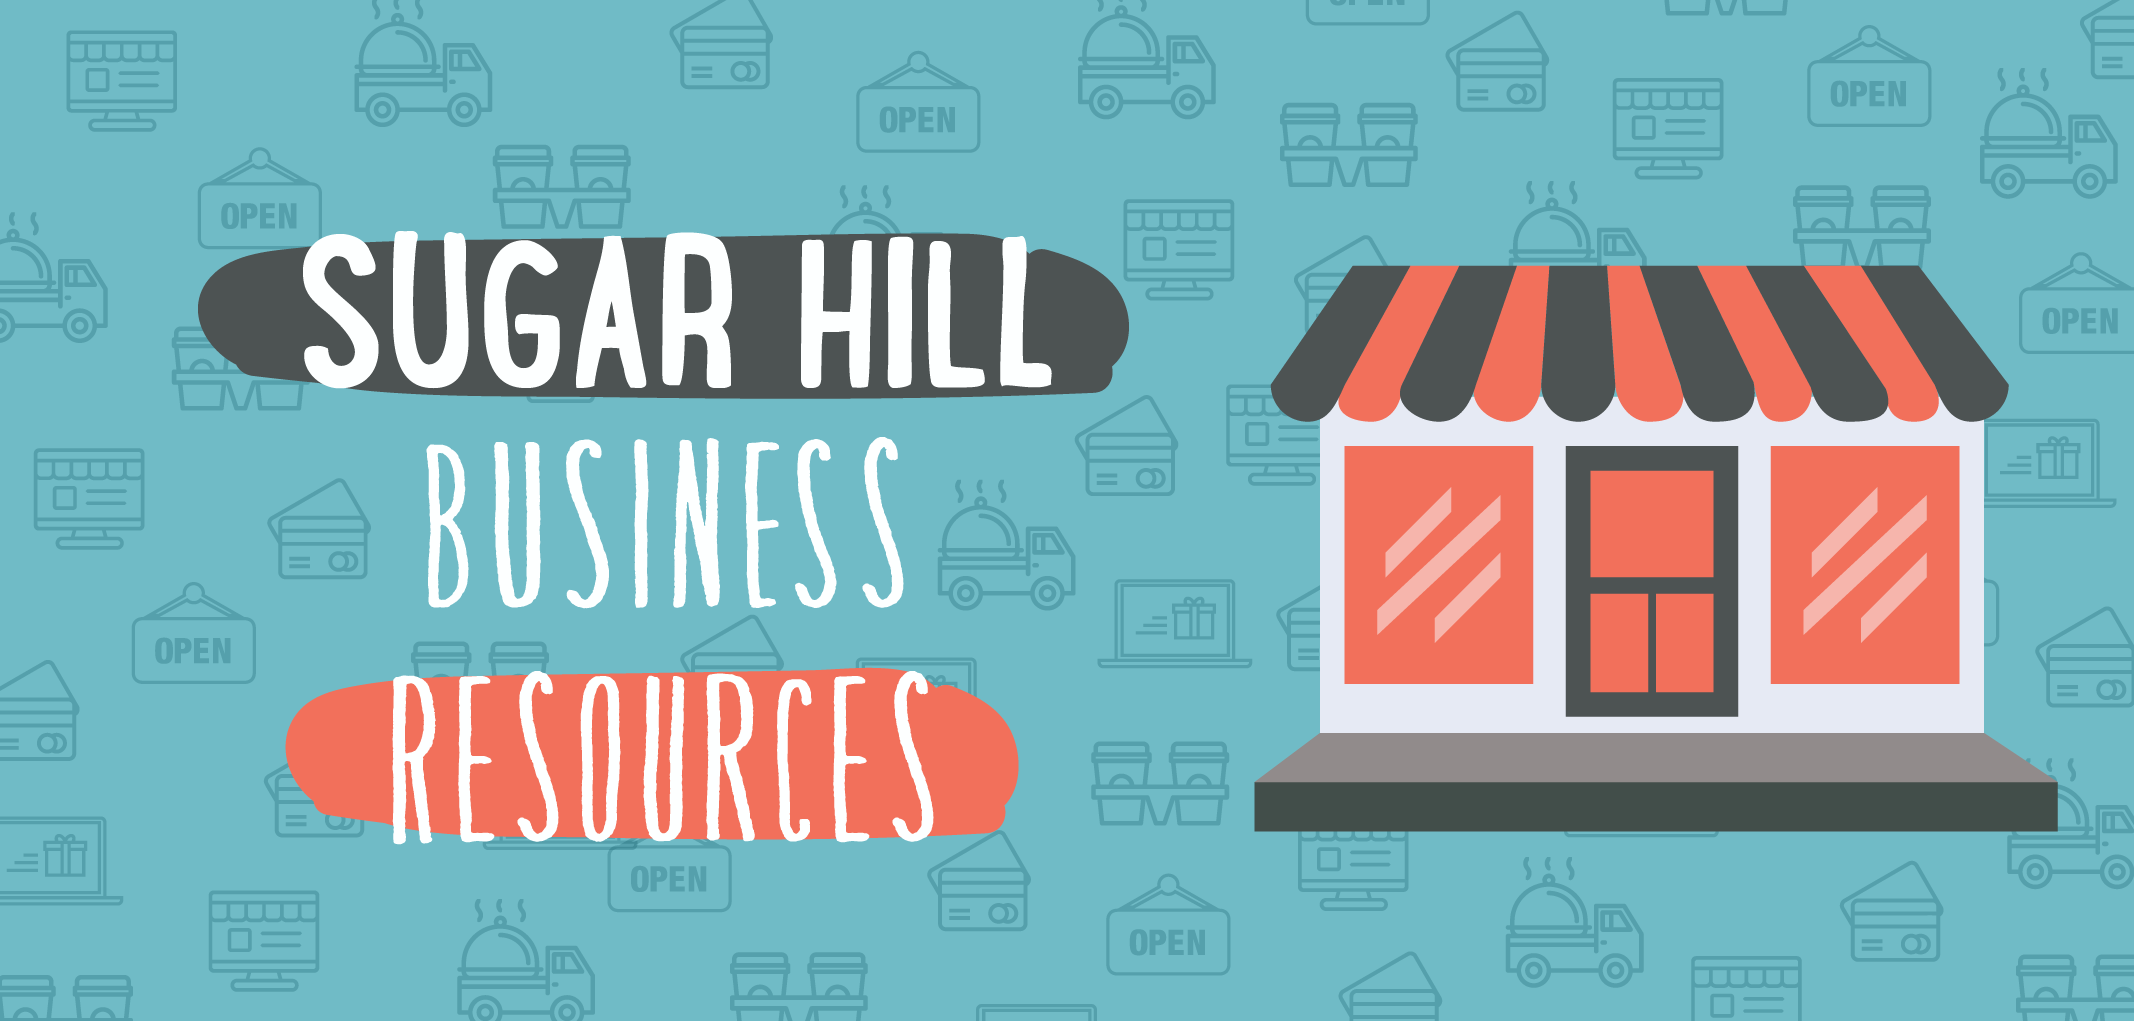 Sugar Hill Business Resource Graphic